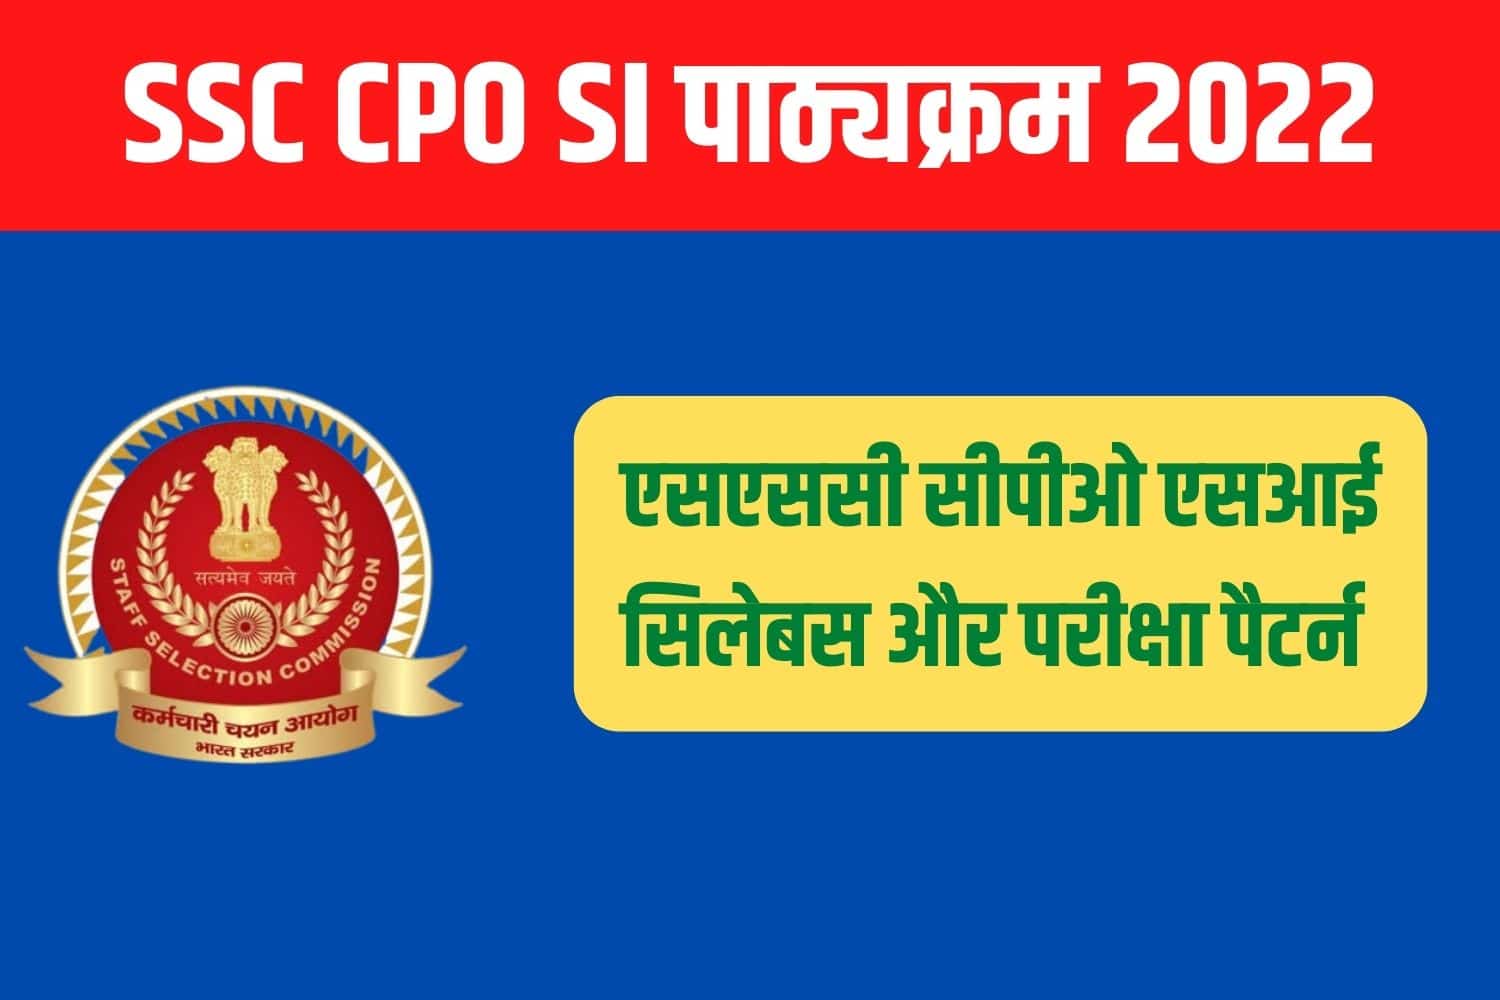 SSC CPO Syllabus 2022 in Hindi | एसएससी सीपीओ पाठ्यक्रम और परीक्षा पैटर्न